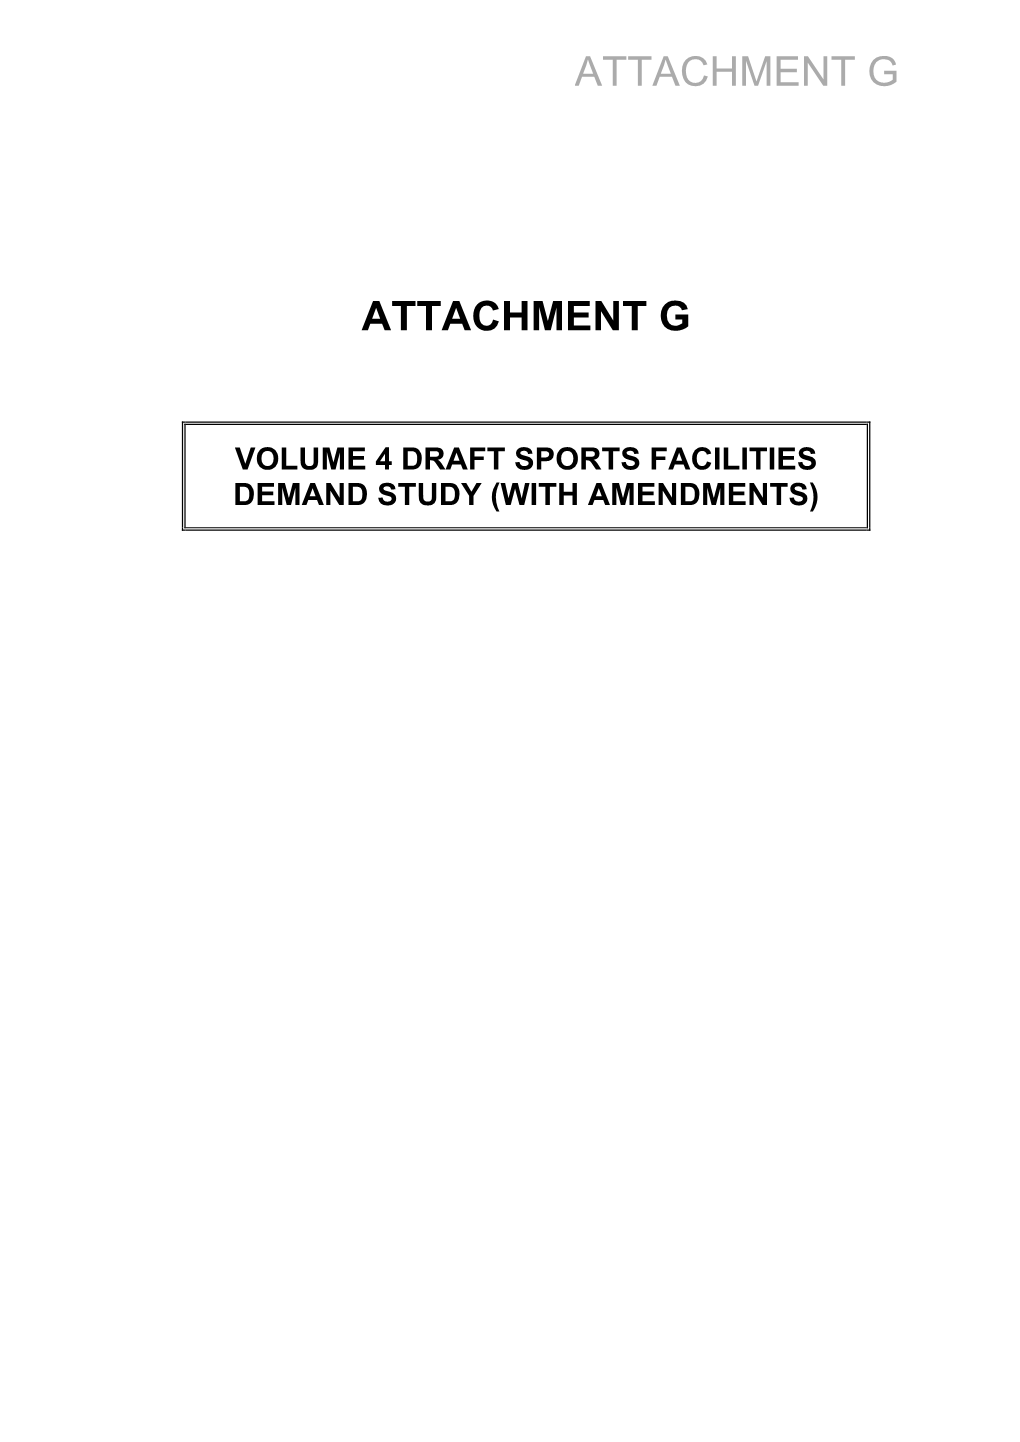 Volume 4 Draft Sports Facilities Demand Study (With Amendments)